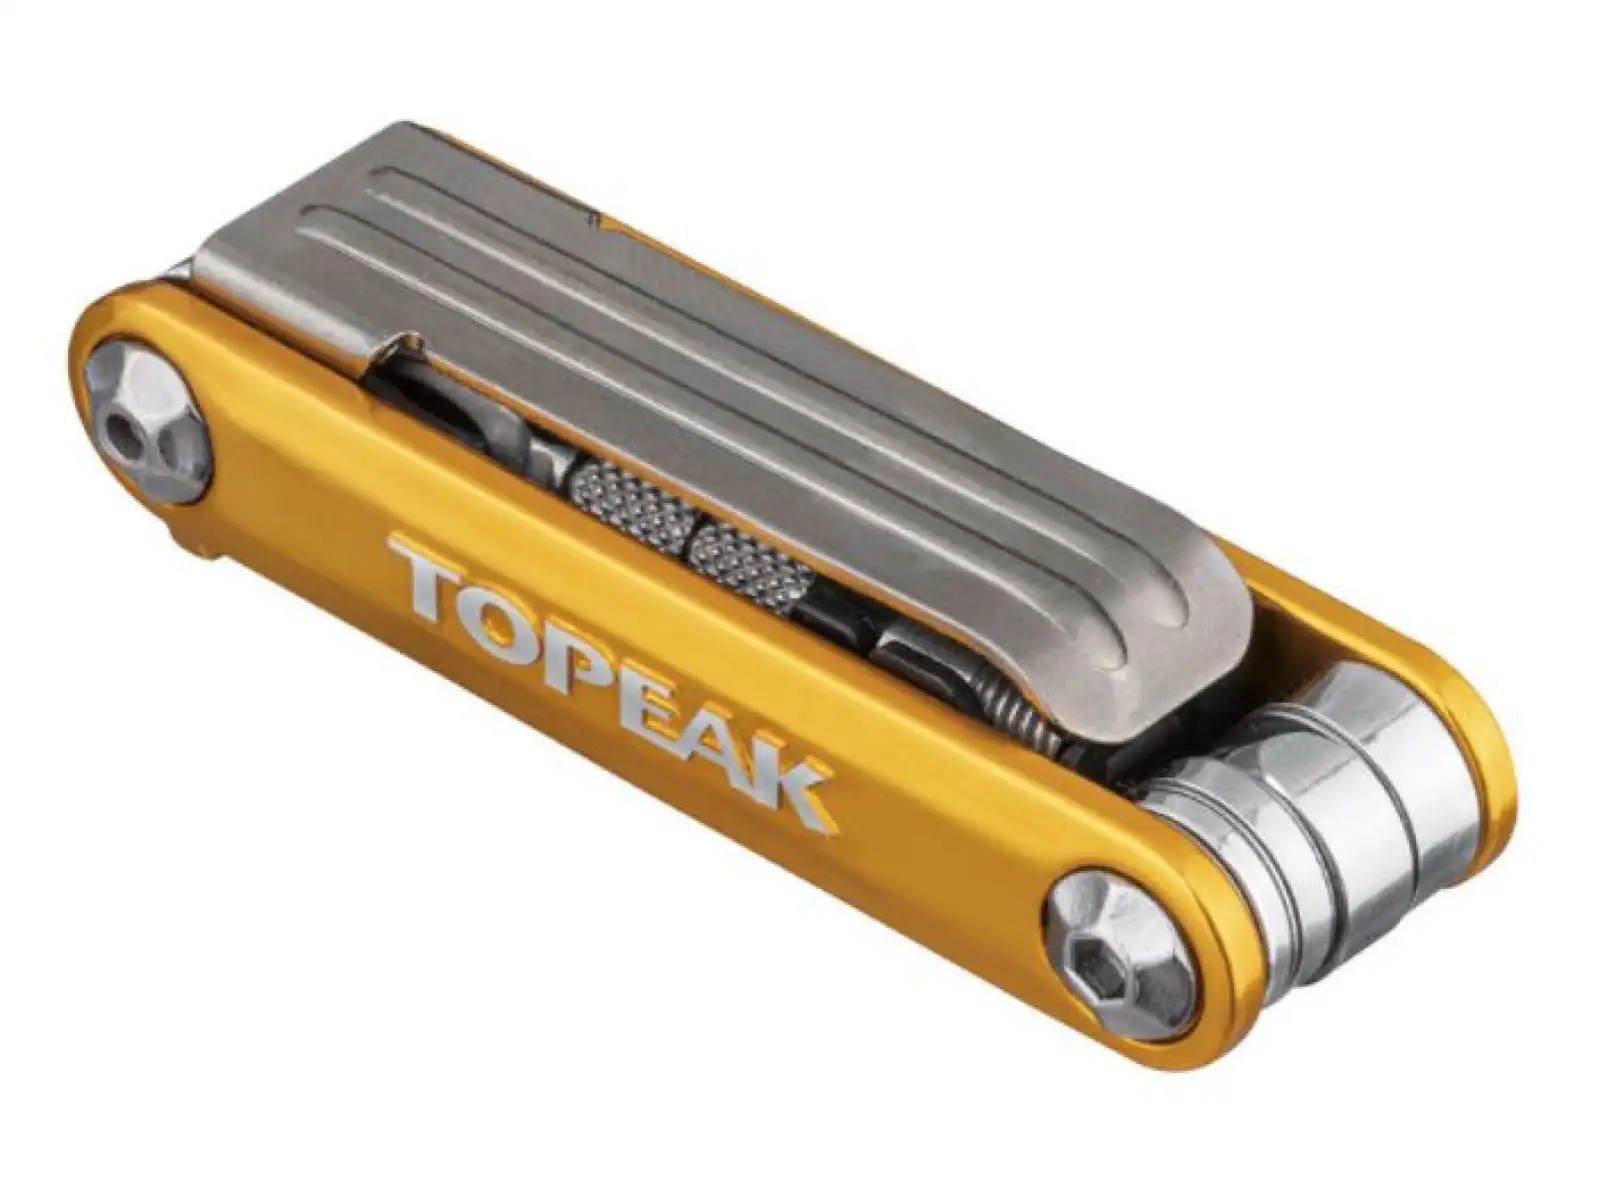 Topeak Tubi 11 Combo multiklíč 11 funkcí gold